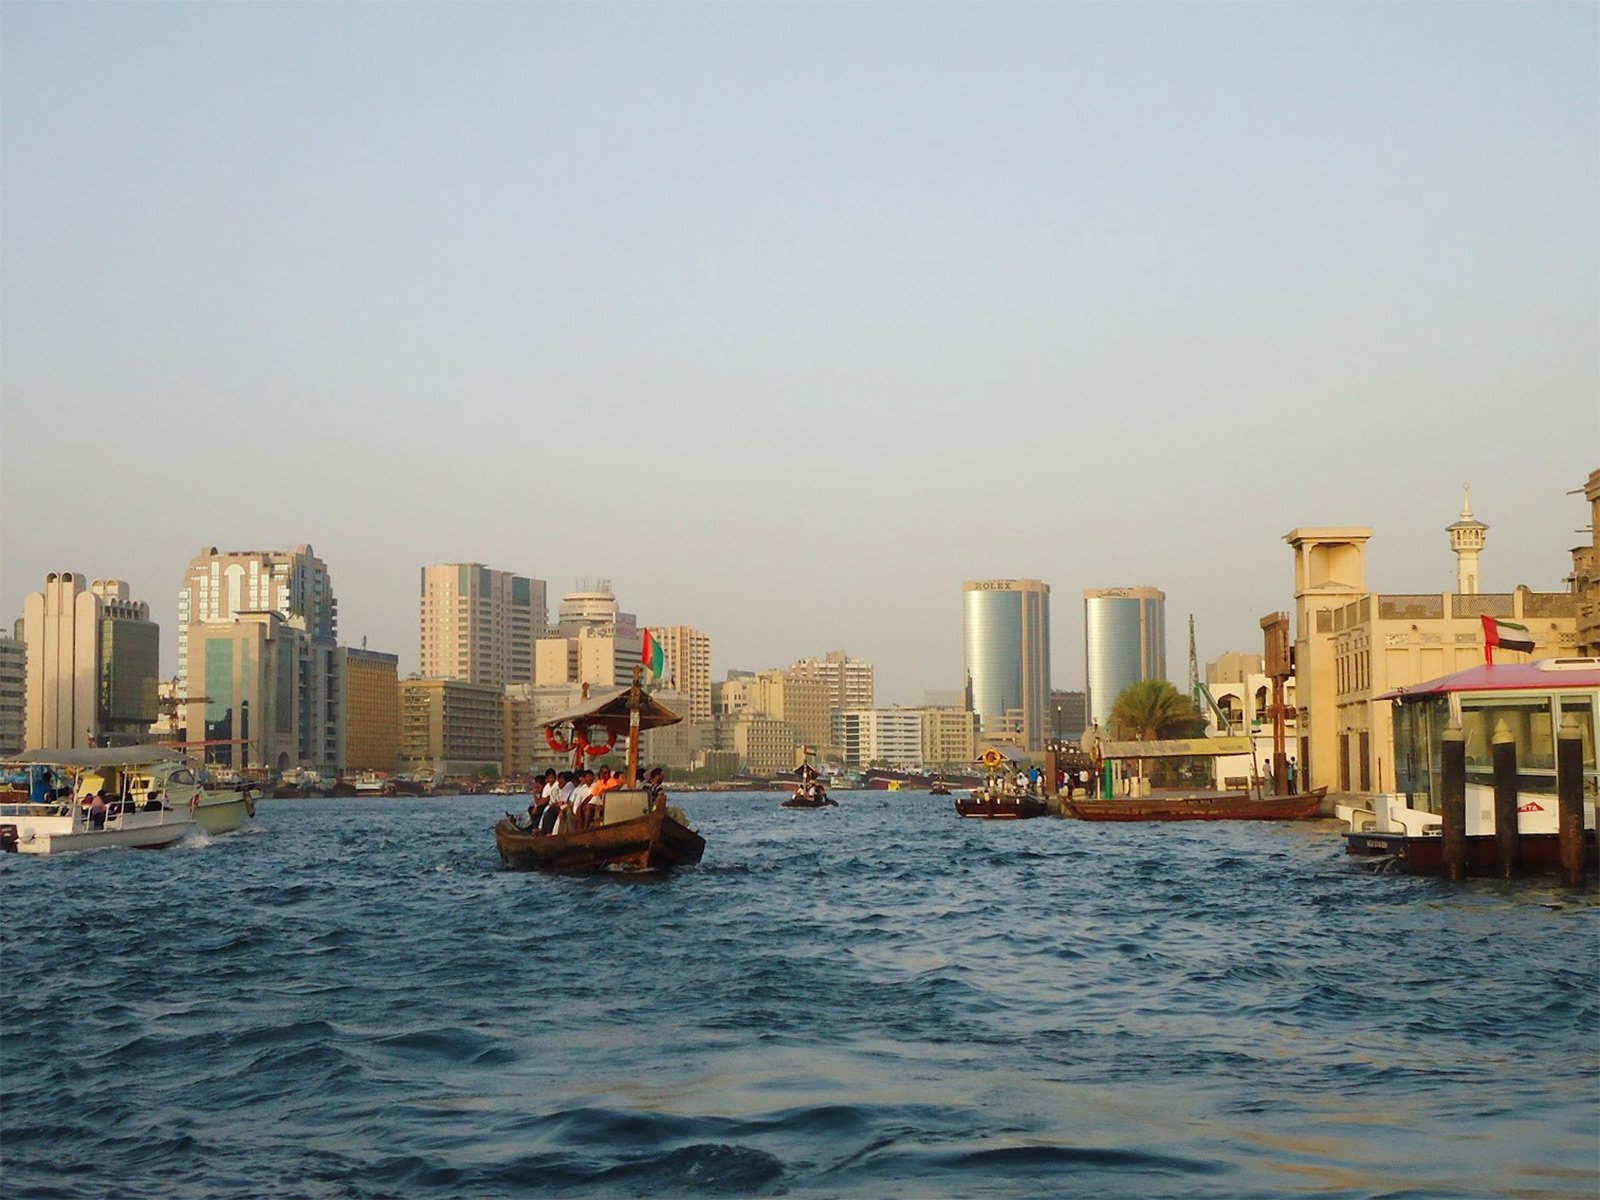 How to take an abra boat in Dubai